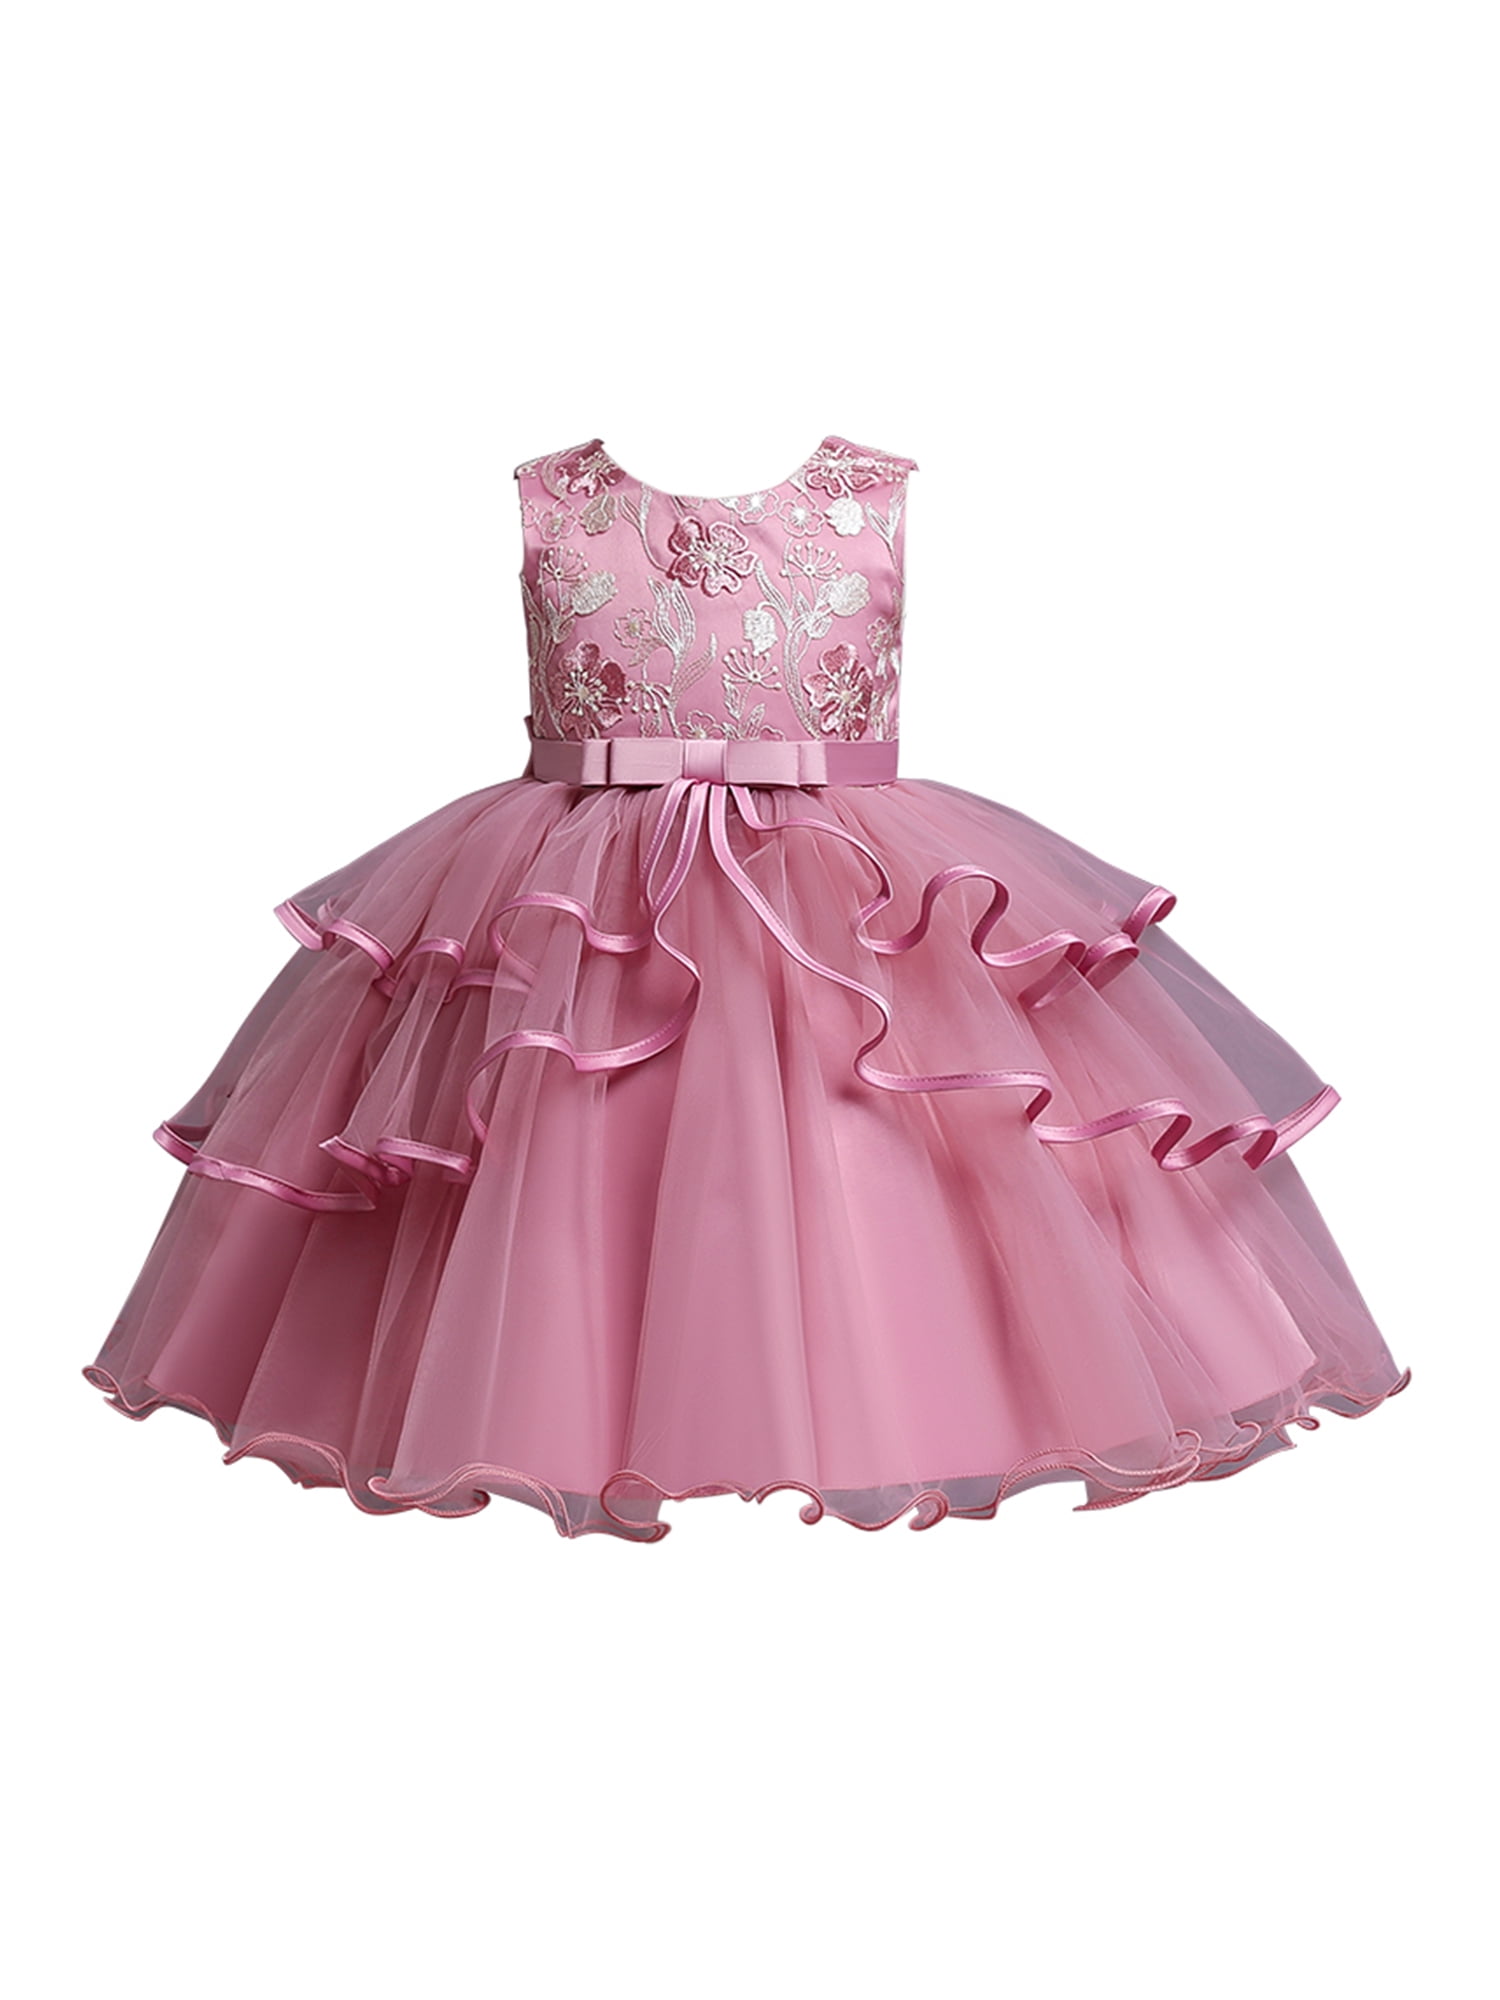 Binwwede 3-9T Pearl Flower Girls Sleeveless Dresses Kids Bow Ball Gown Party Dress Pink 